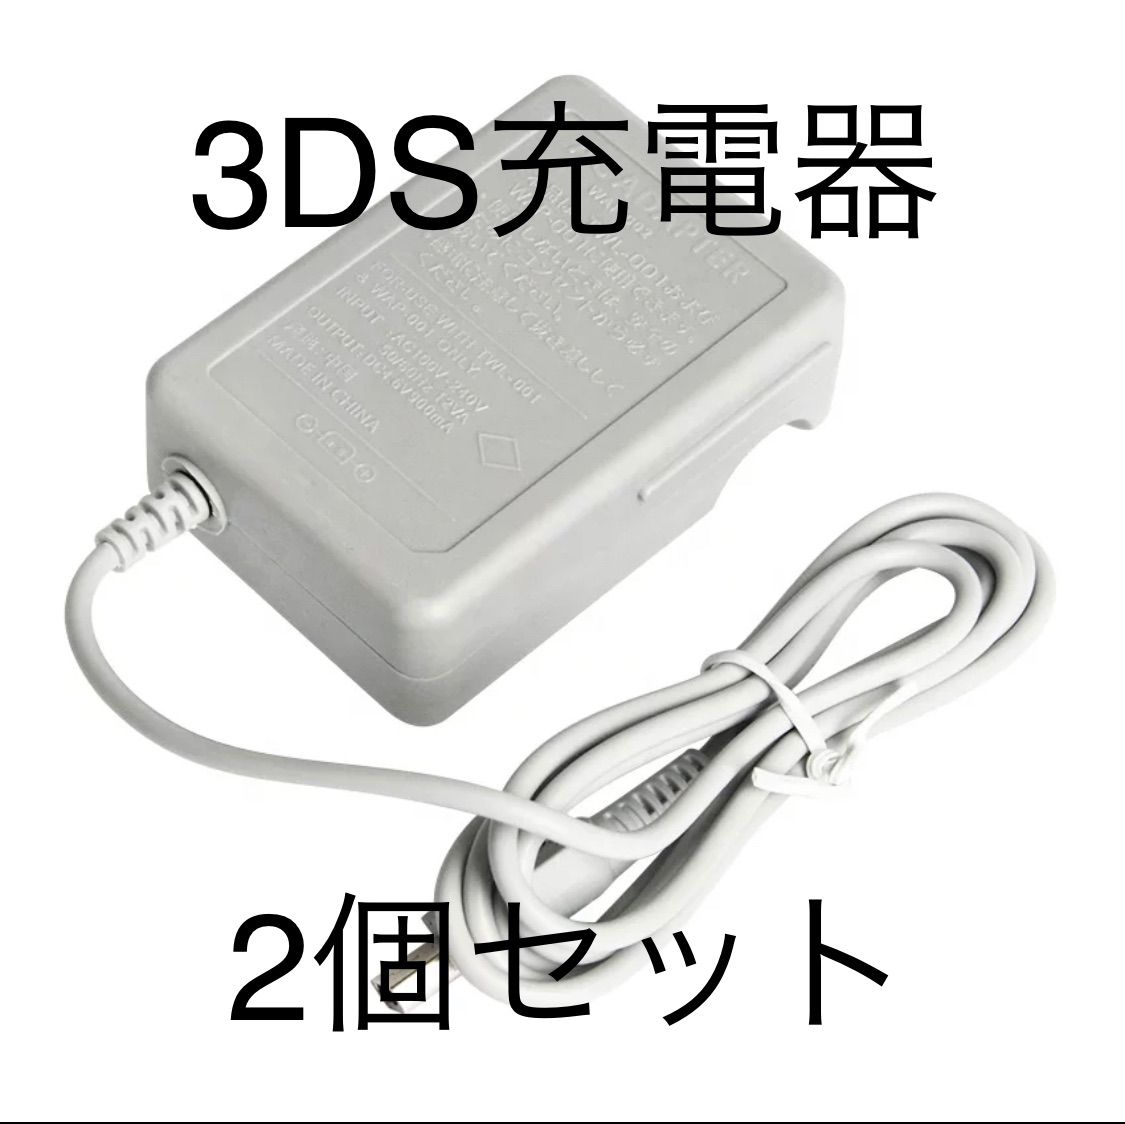 3DS用 充電器 非純正 - 携帯用ゲーム本体